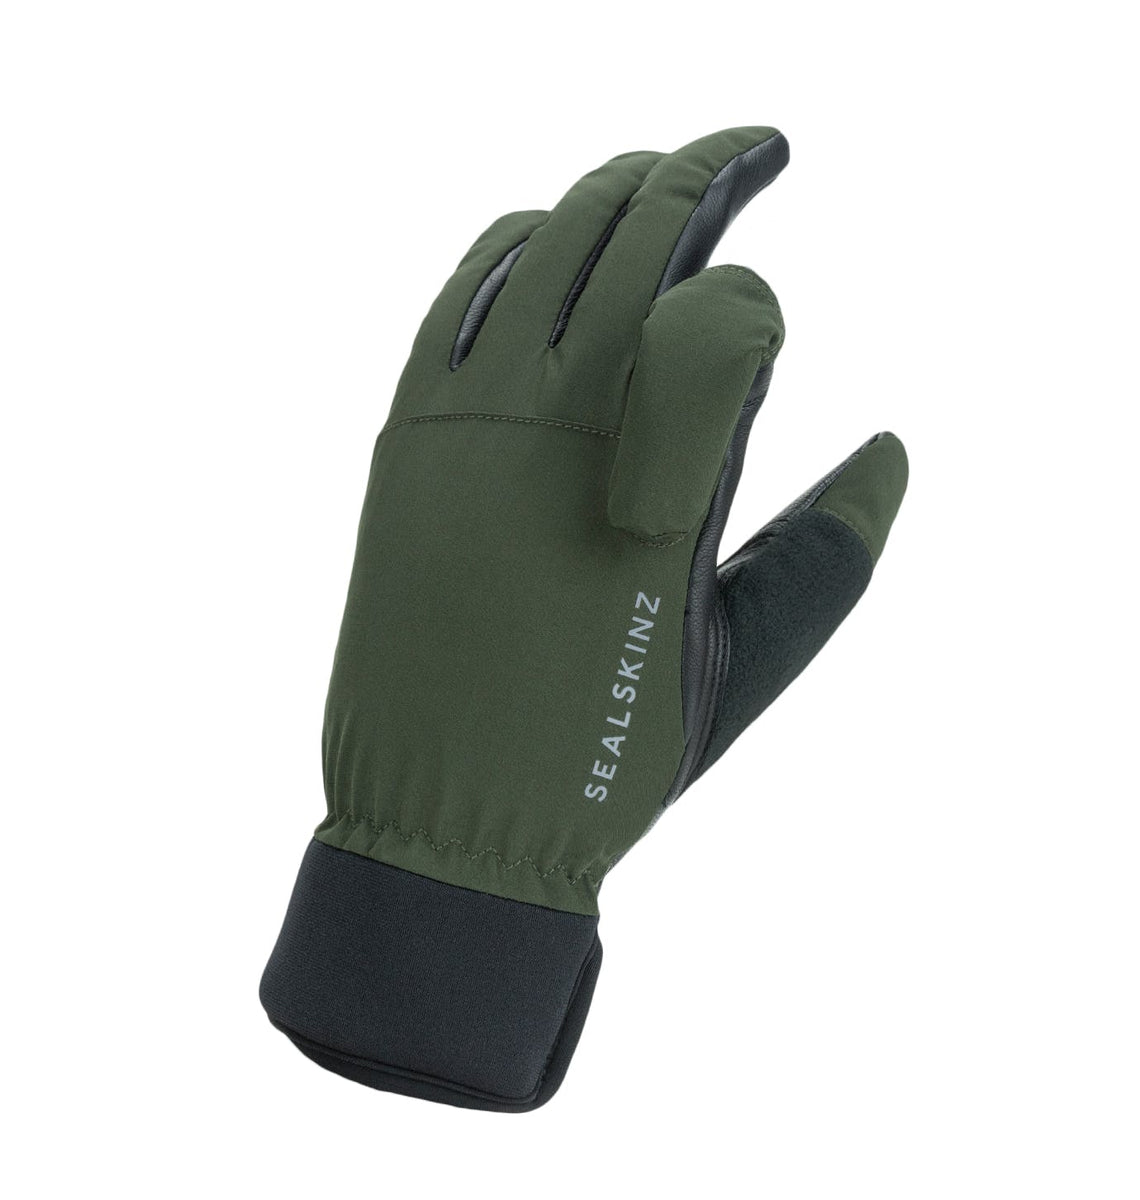 Lightweigt & Waterproof Safety Work Gloves for Men | toolant